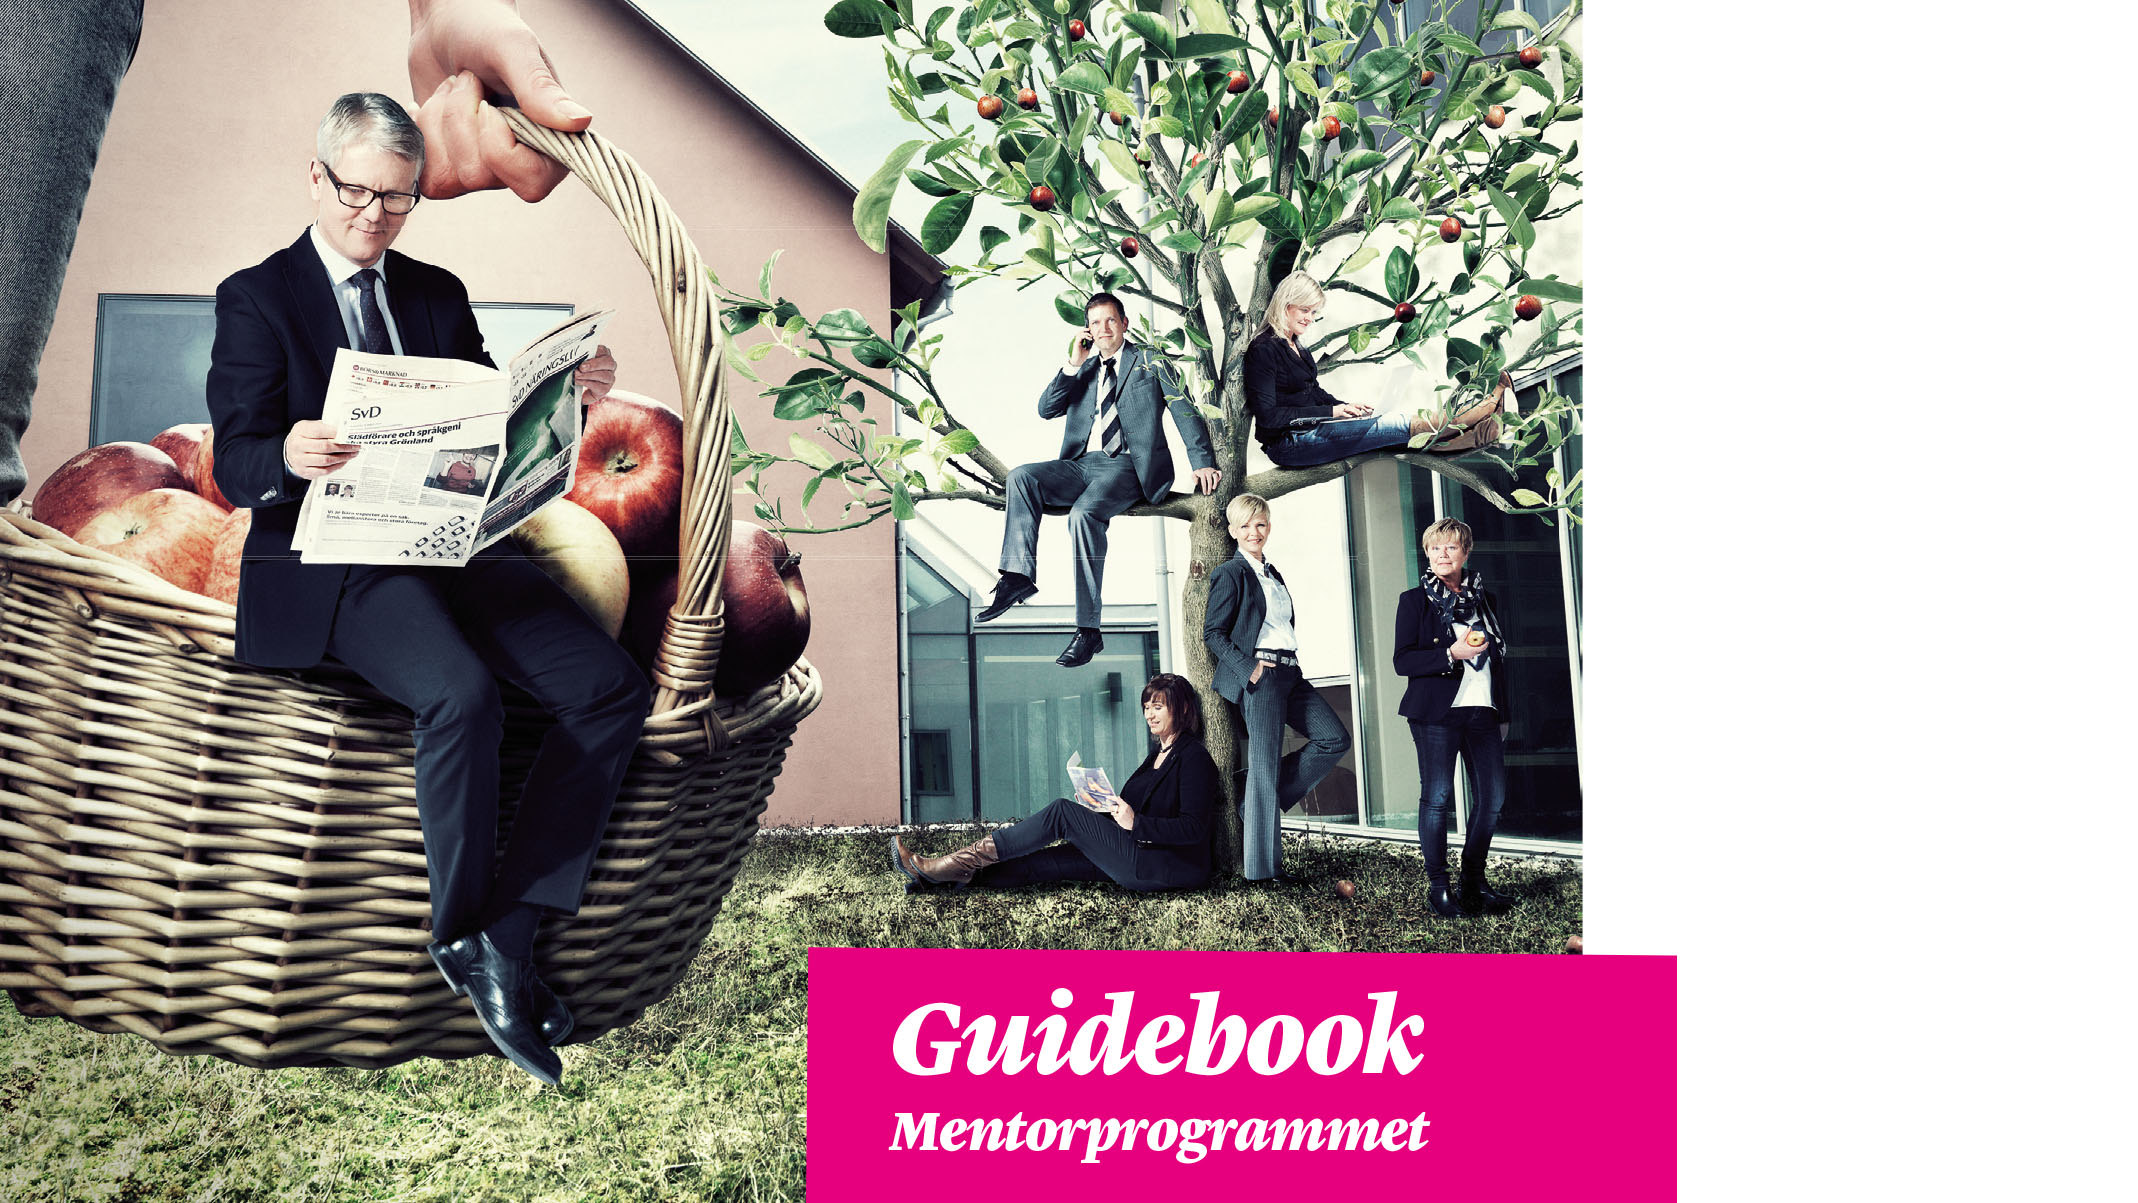 Mentorsprogrammet guidebook omslagsbild.